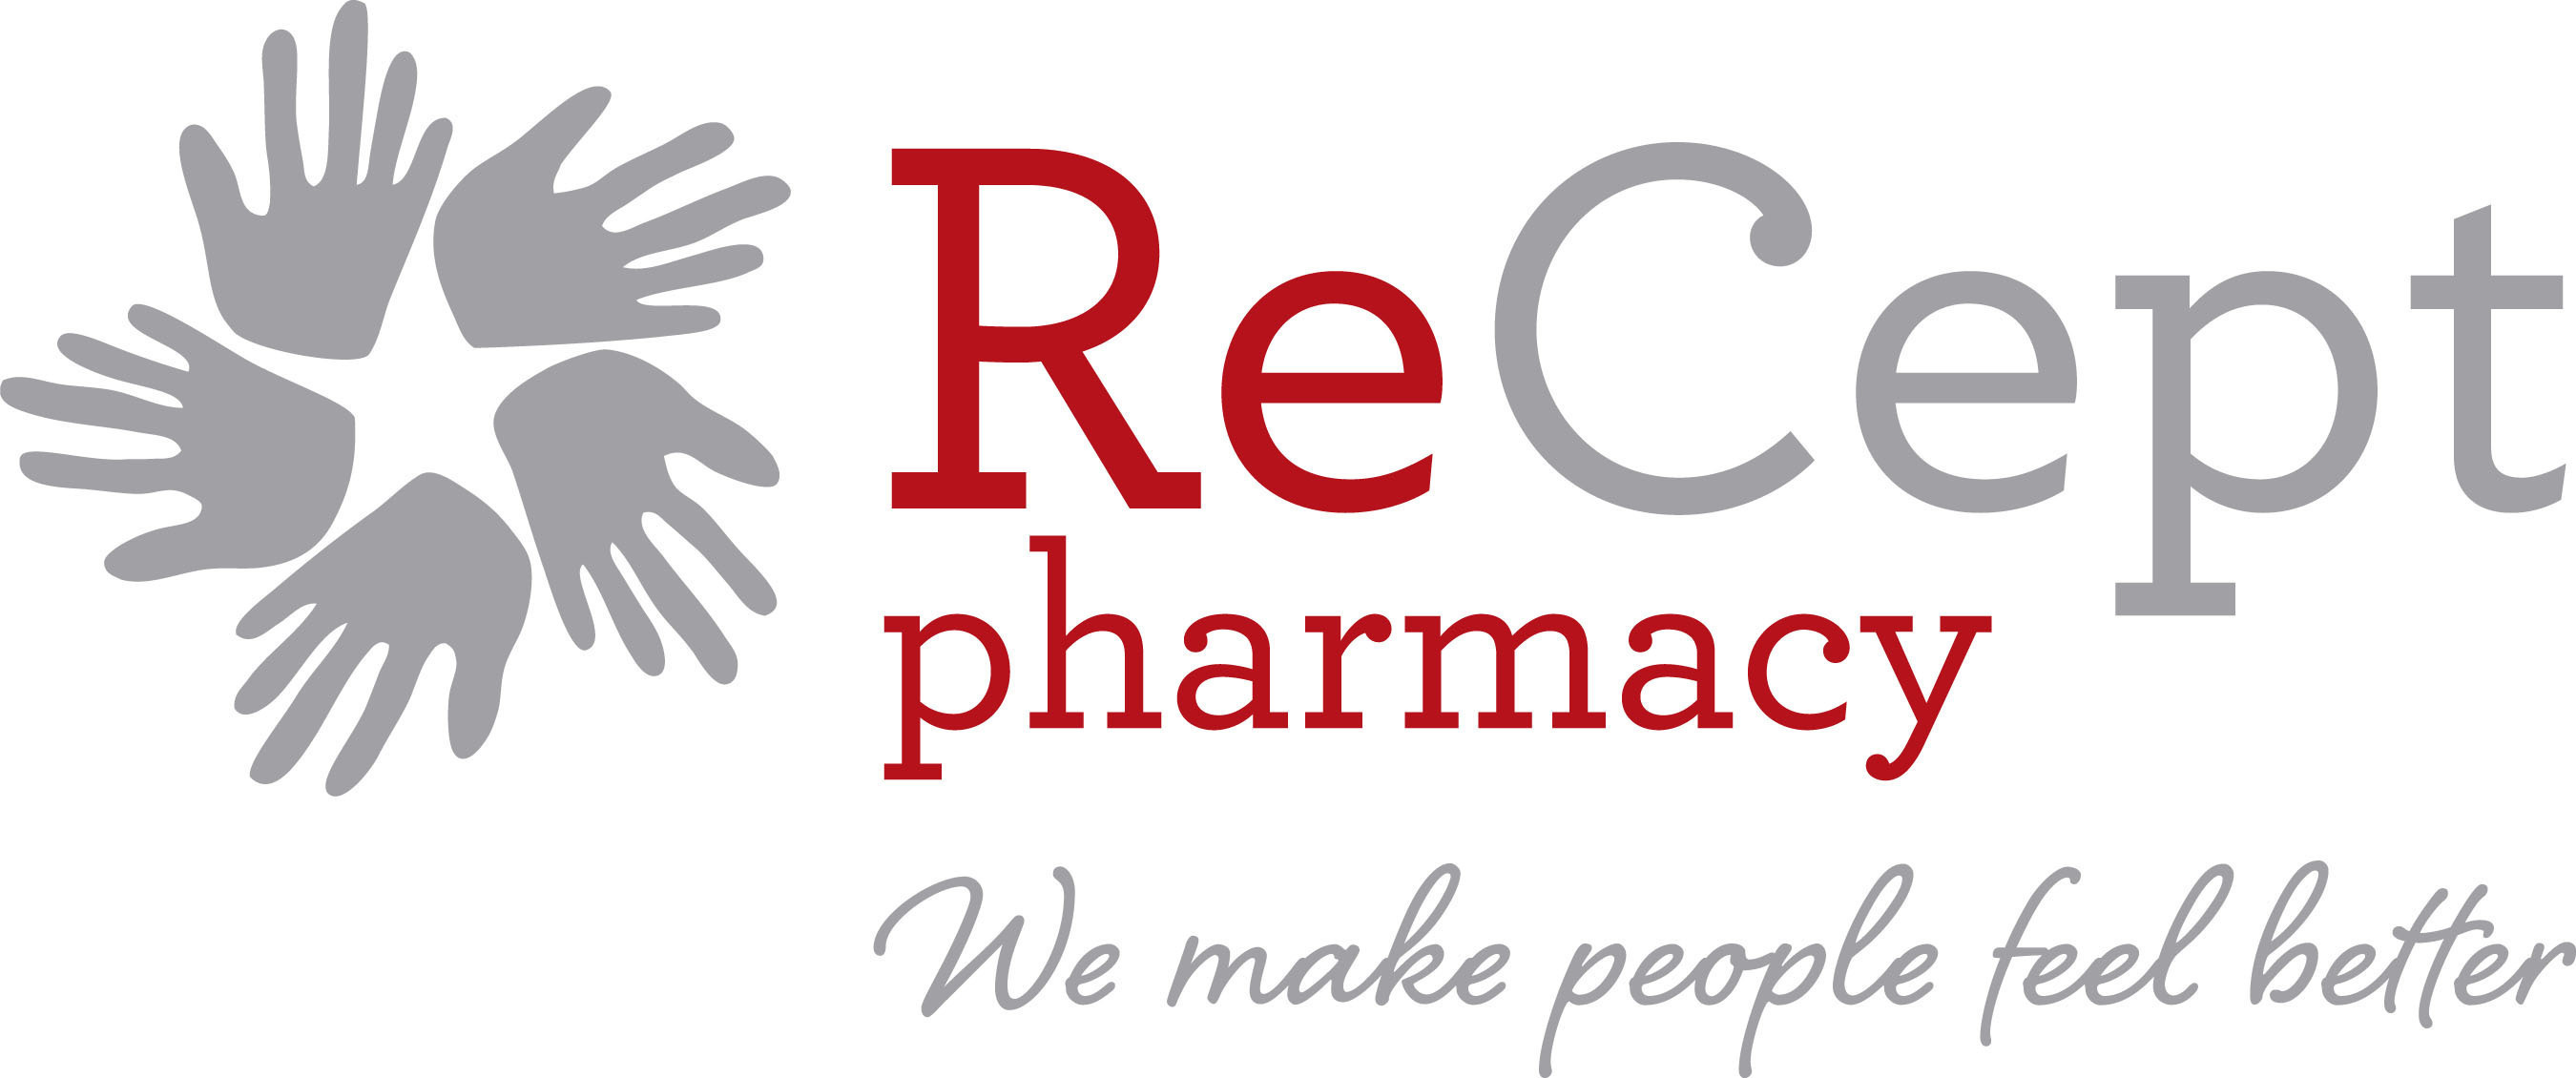 ReCept Pharmacy's Helping Hands Logo symbolizes the organization's dedication to "making people feel better". (PRNewsFoto/ReCept Pharmacy, LP)